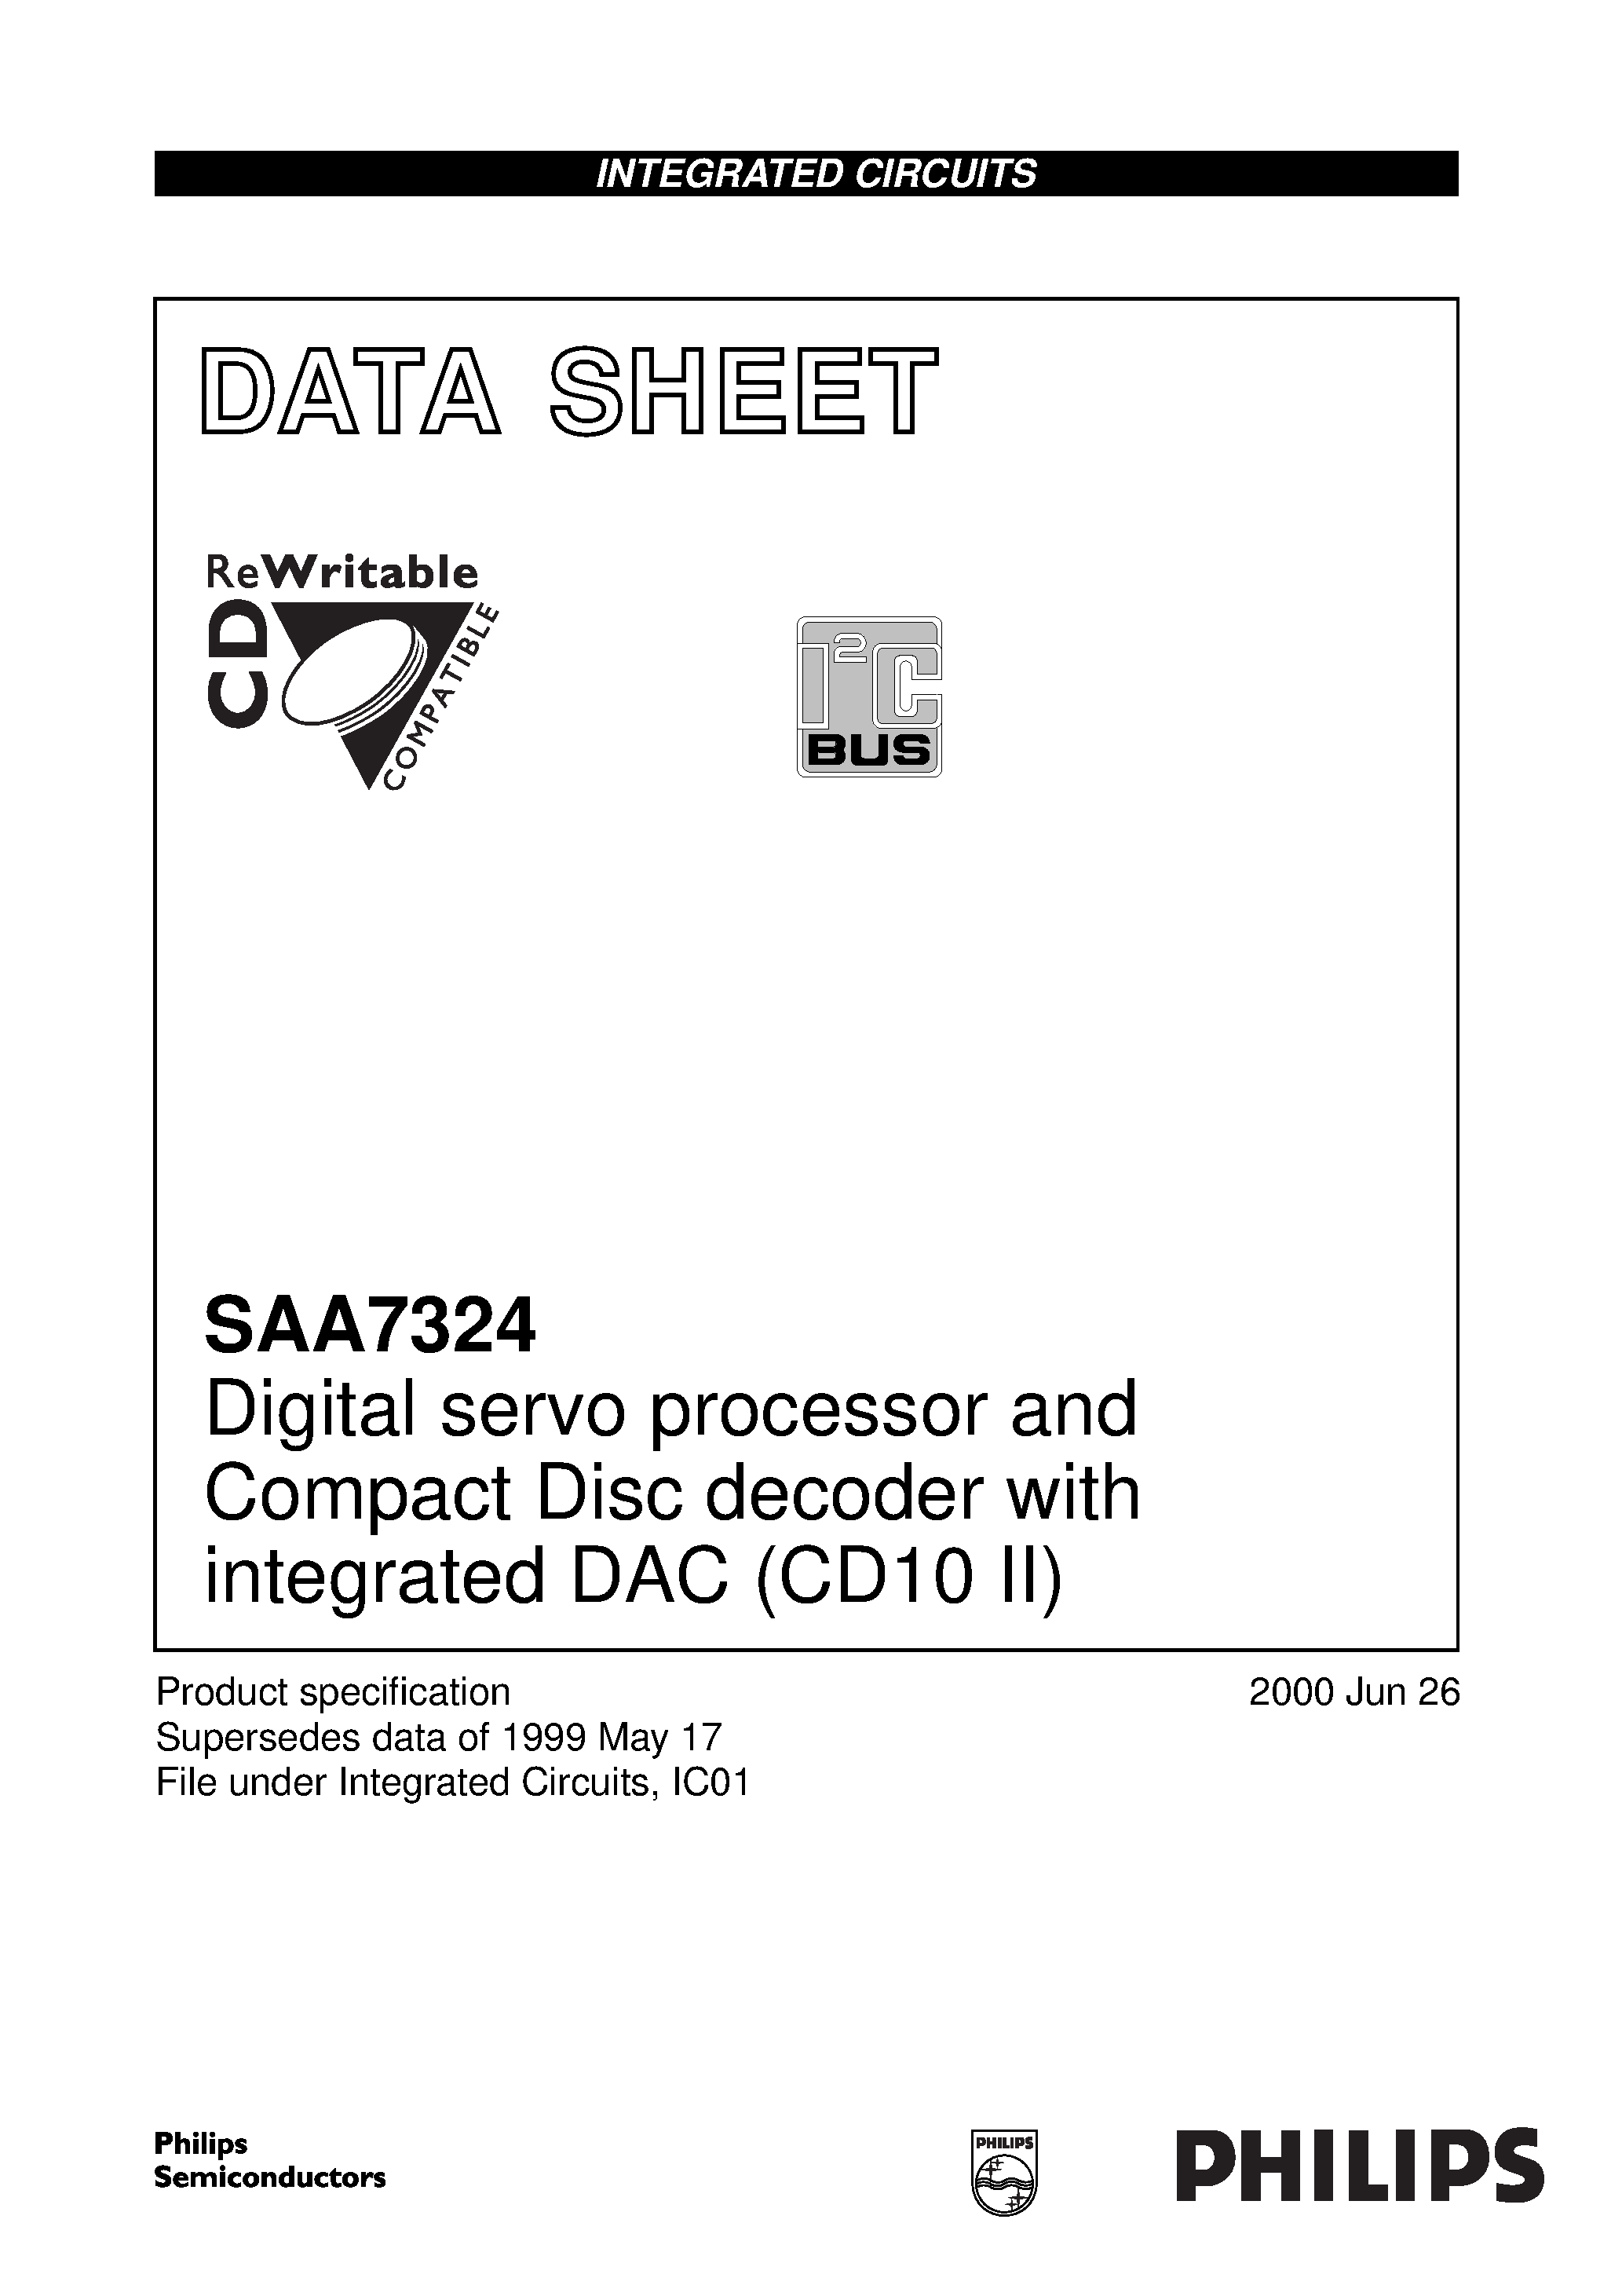 Даташит SAA7324 - Digital servo processor and Compact Disc decoder with integrated DAC CD10 II страница 1